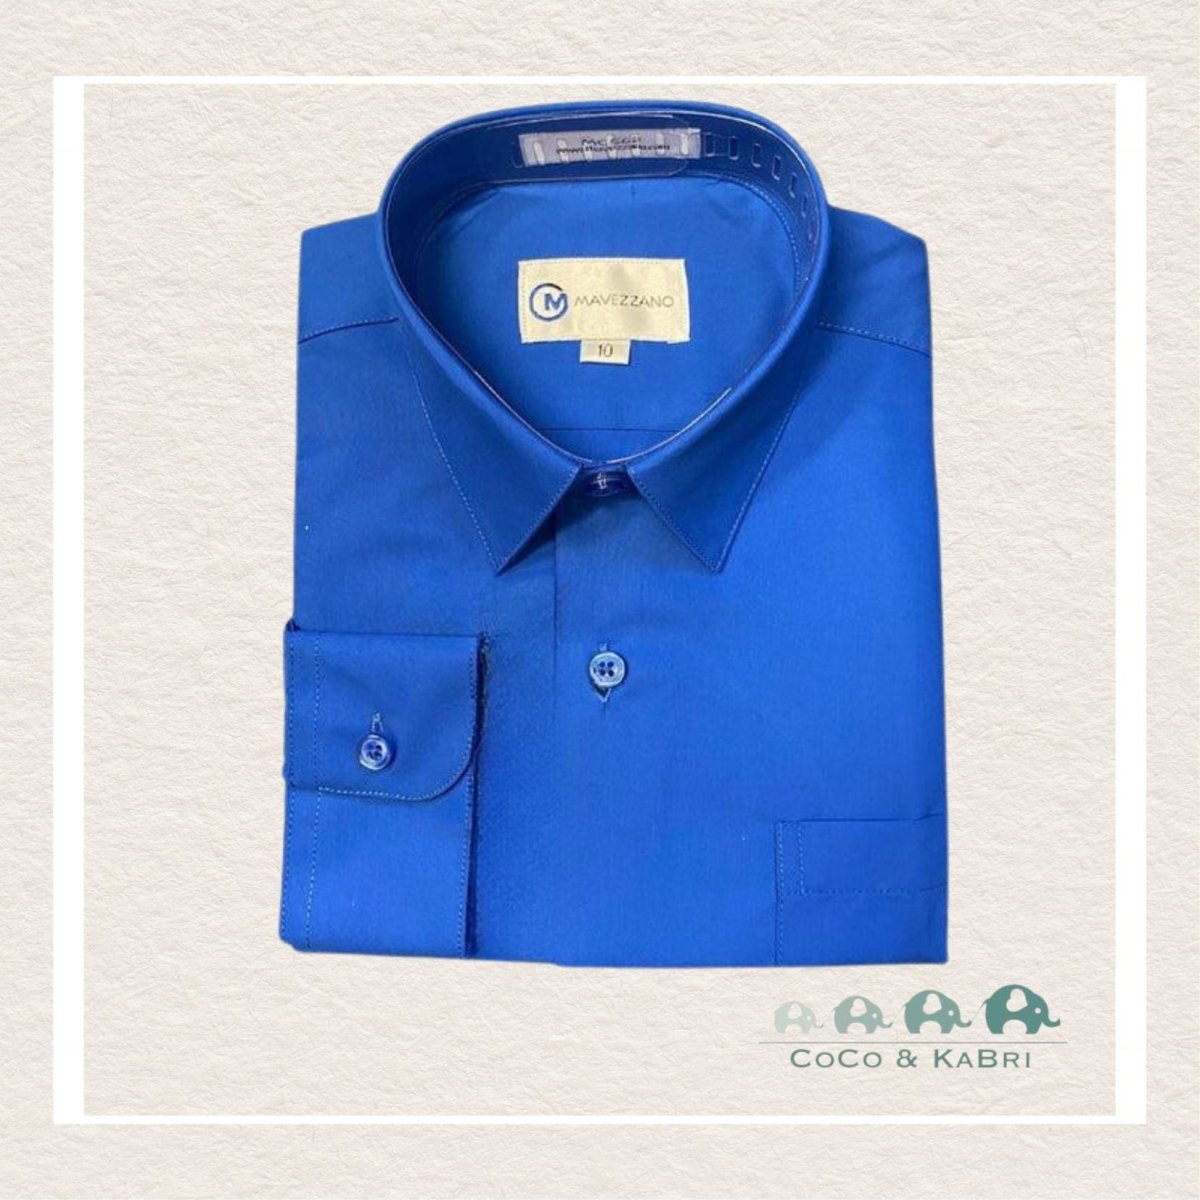 Mavezzano Dress Shirt - Sateen Royal Blue, Dress Shirt, CoCo & KaBri, Children's Boutique